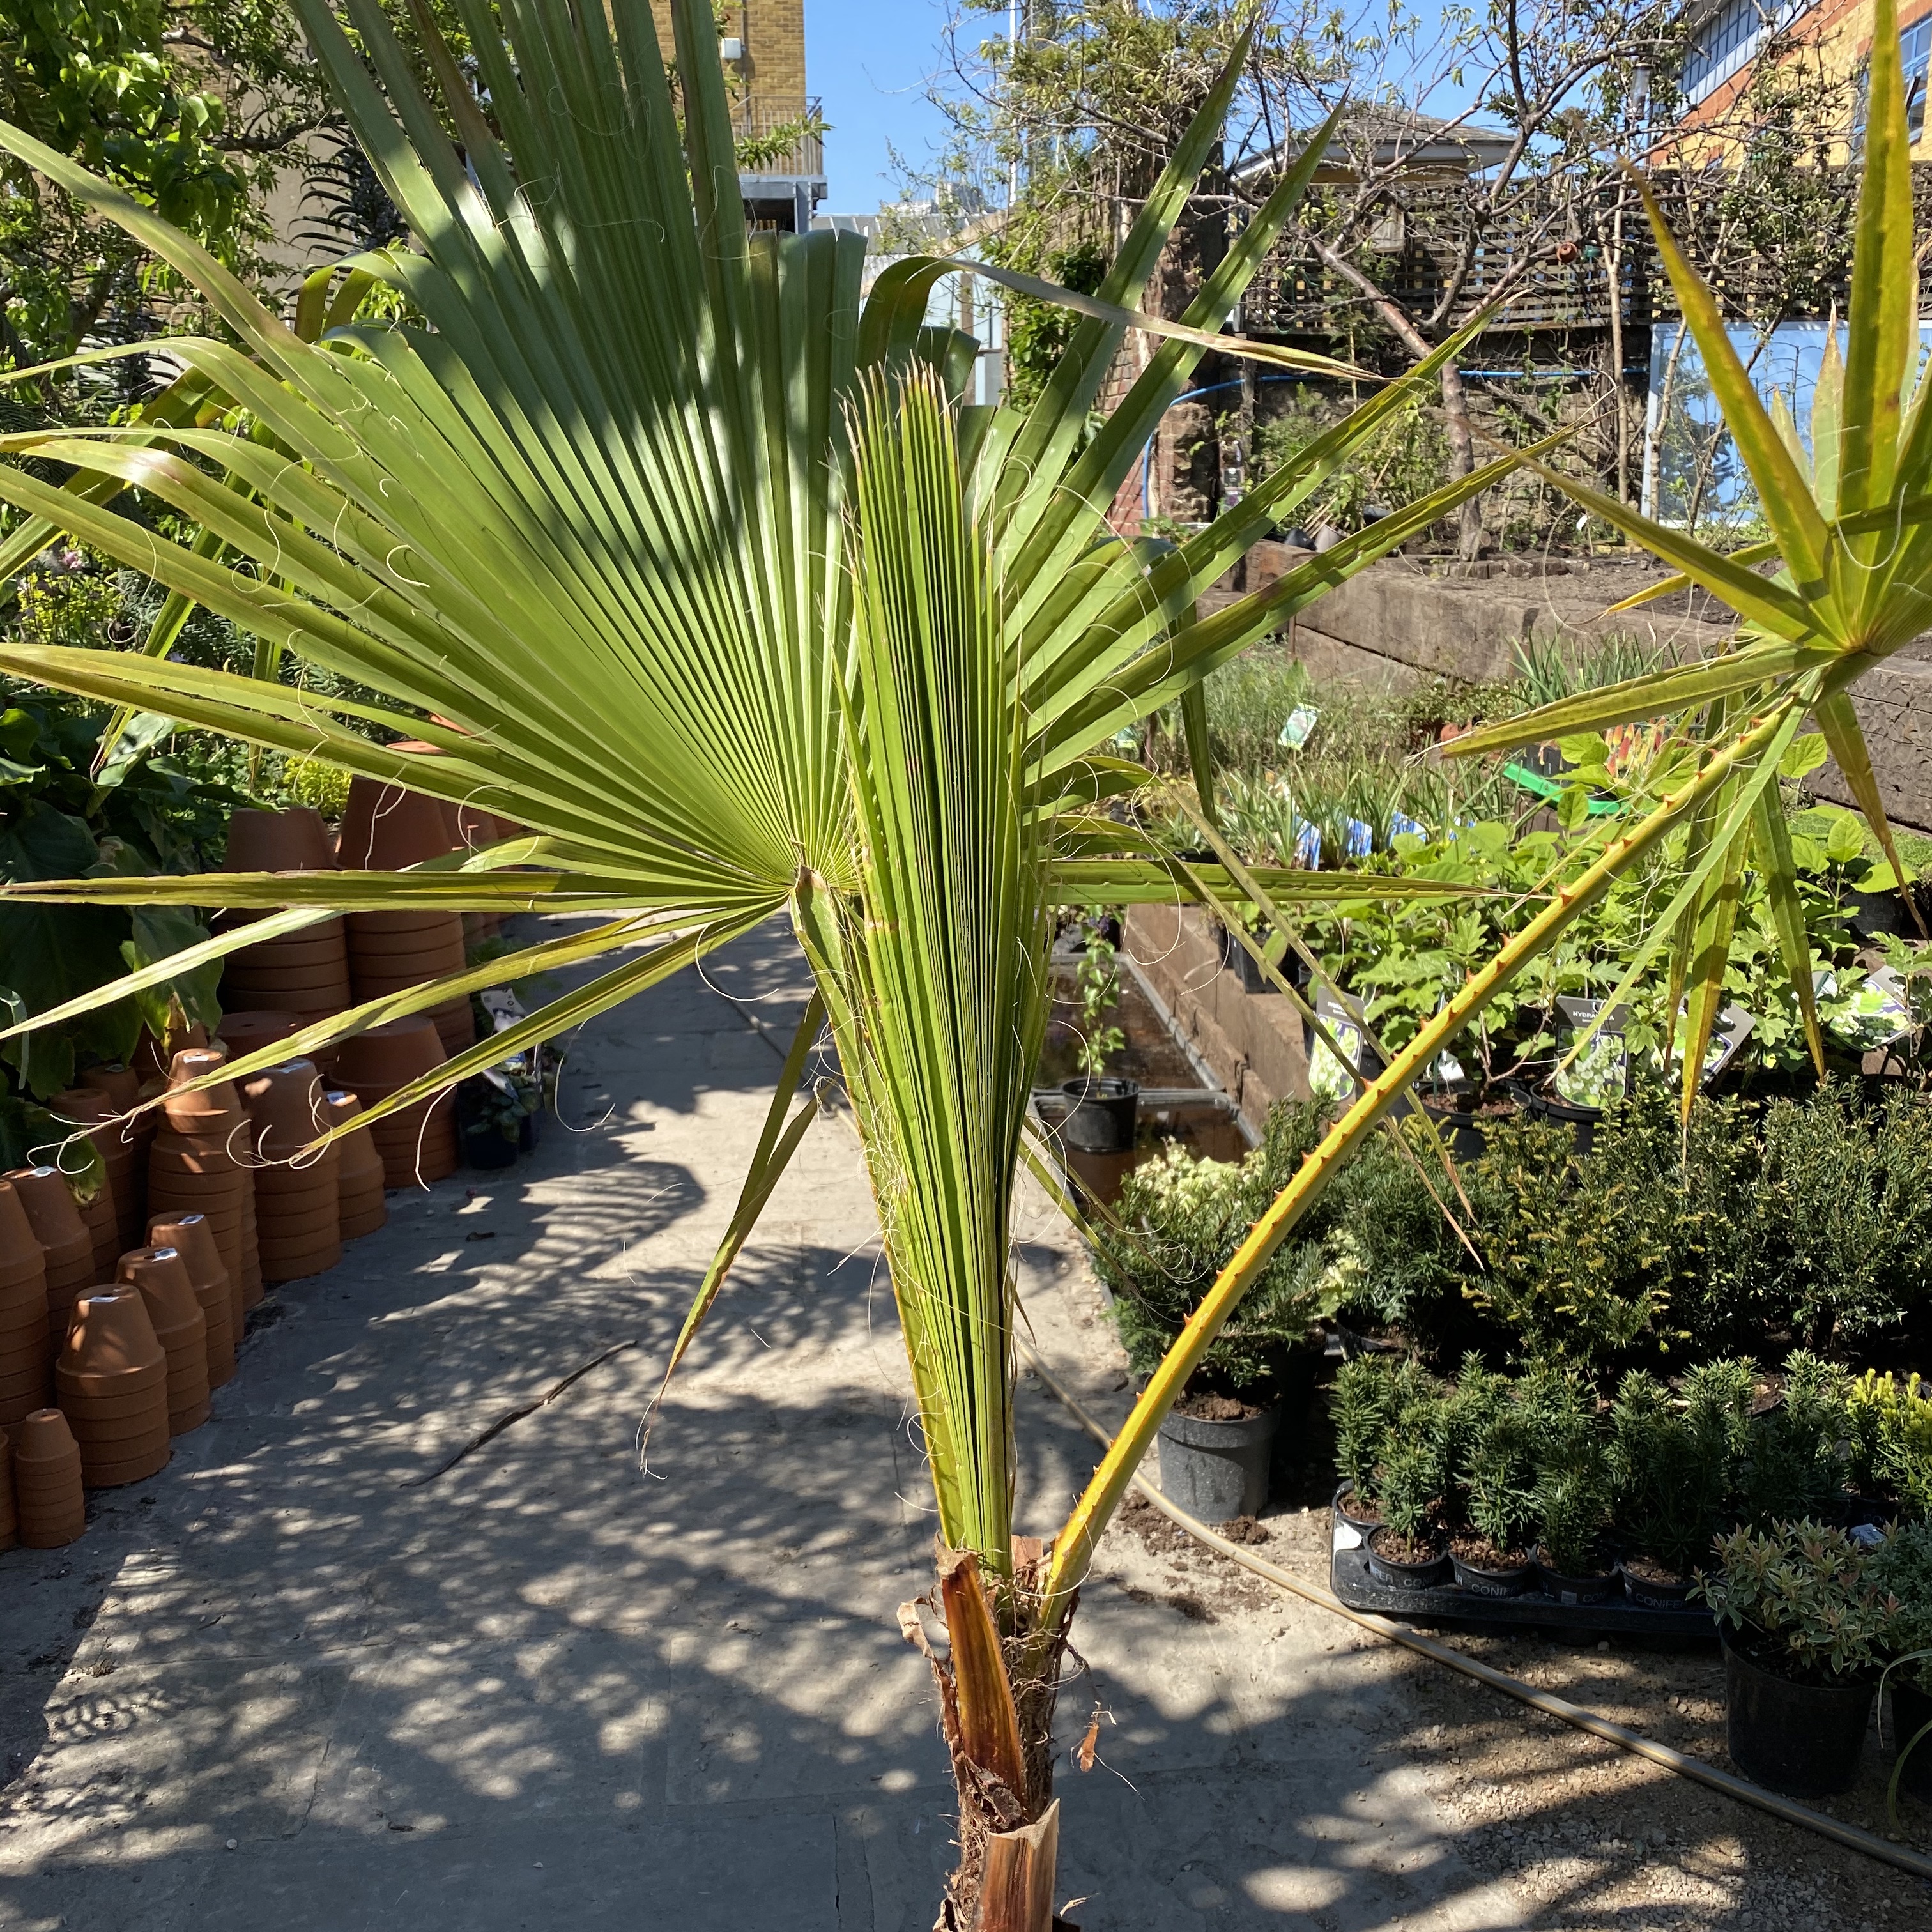 Washingtonia robusta (Mexican Fan Palm)